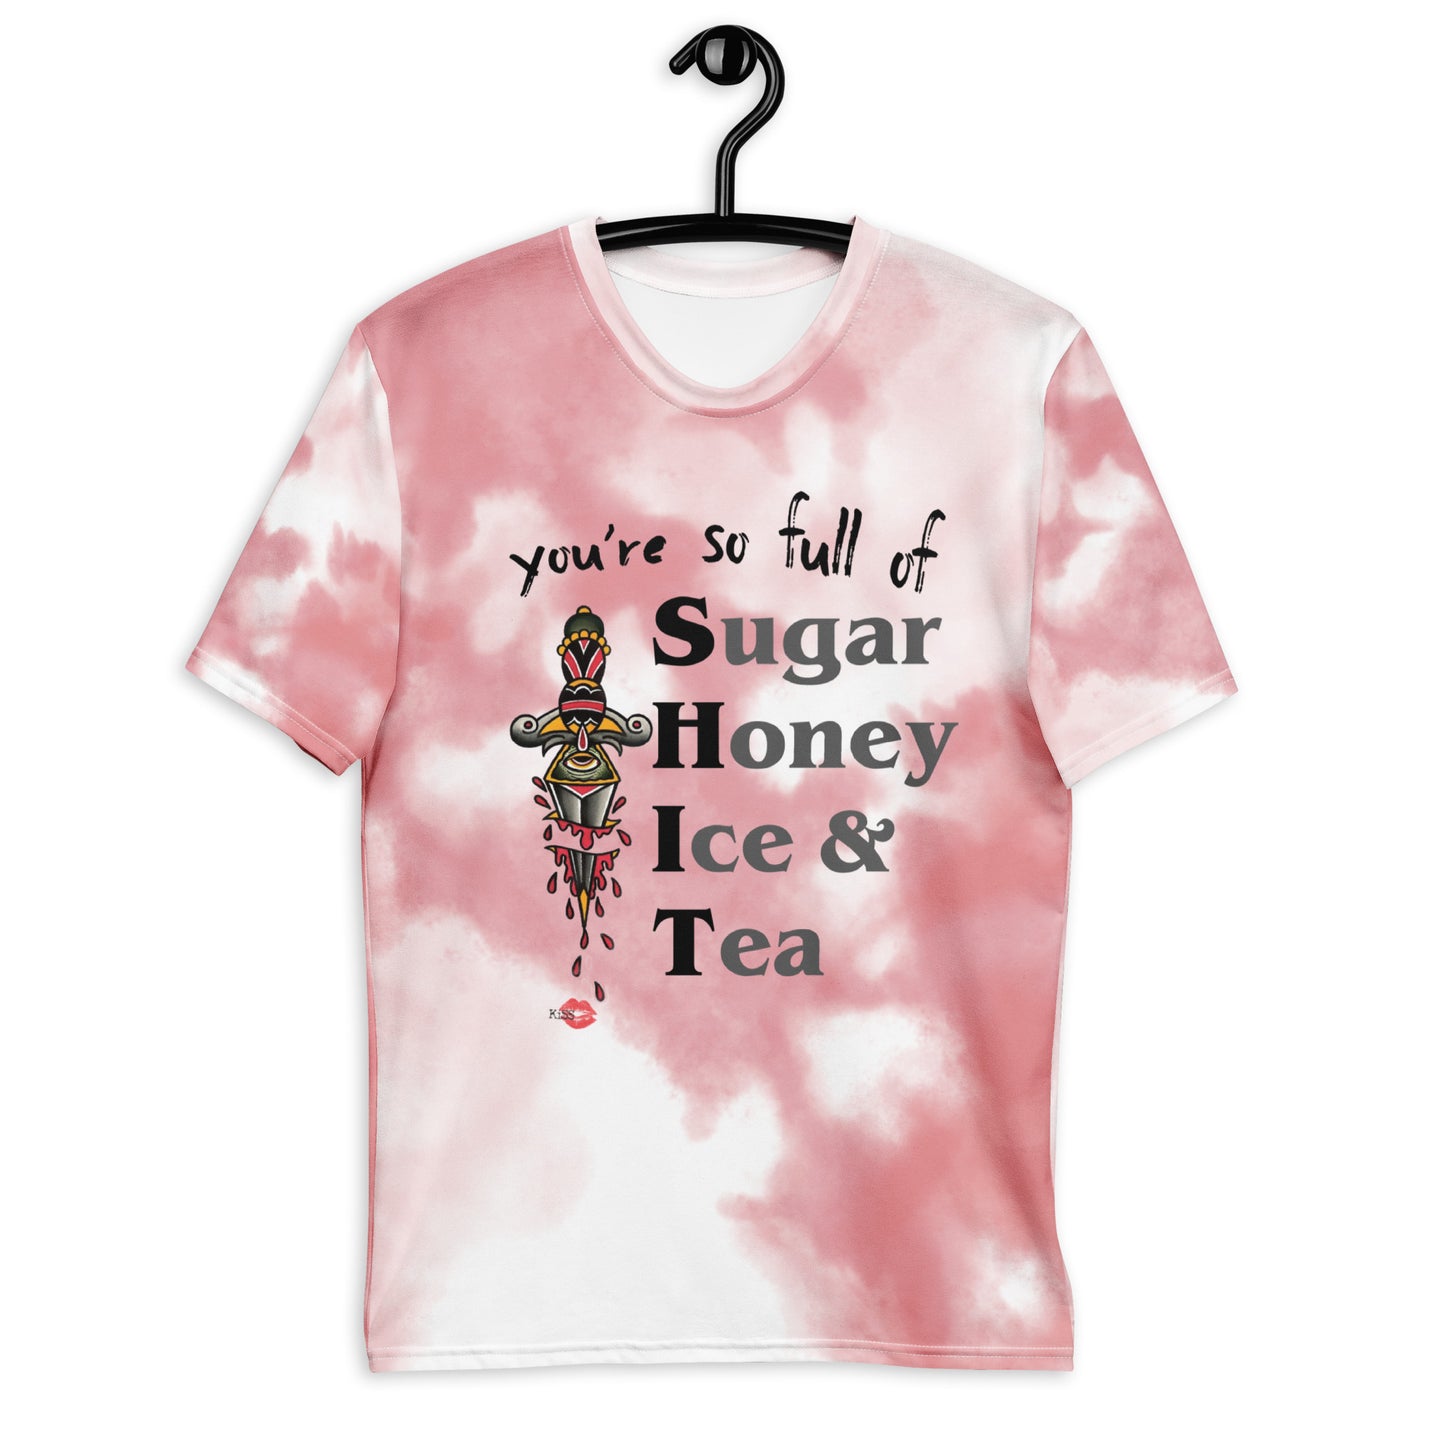 Full of Sh*t KiSS Men's t-shirt - Bring me the Horizon style amo Sugar honey ice tea